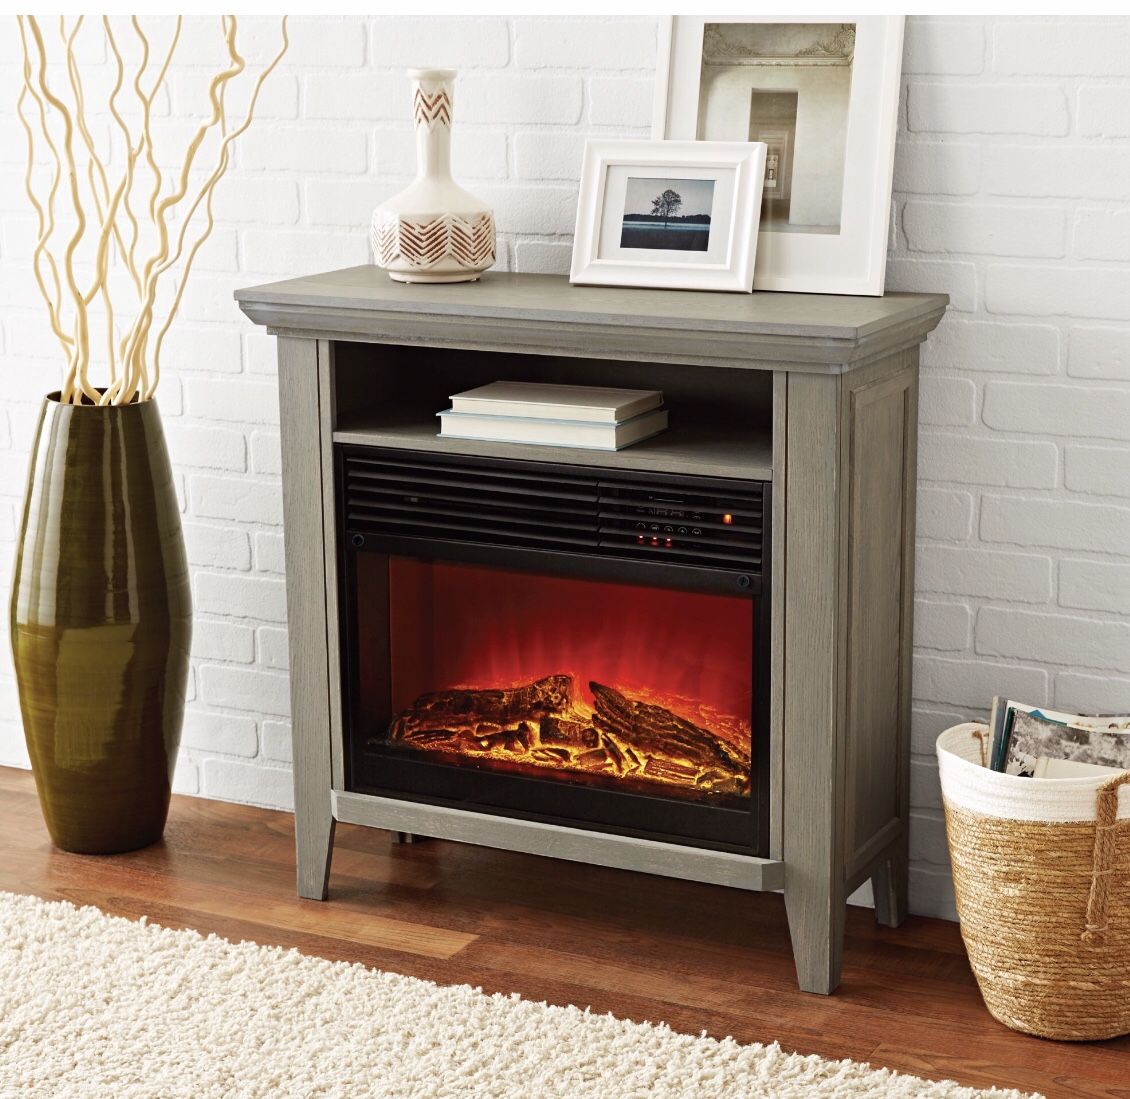 NEW - Infrared Quartz Fireplace Heater with Storage Shelf, Remote Control